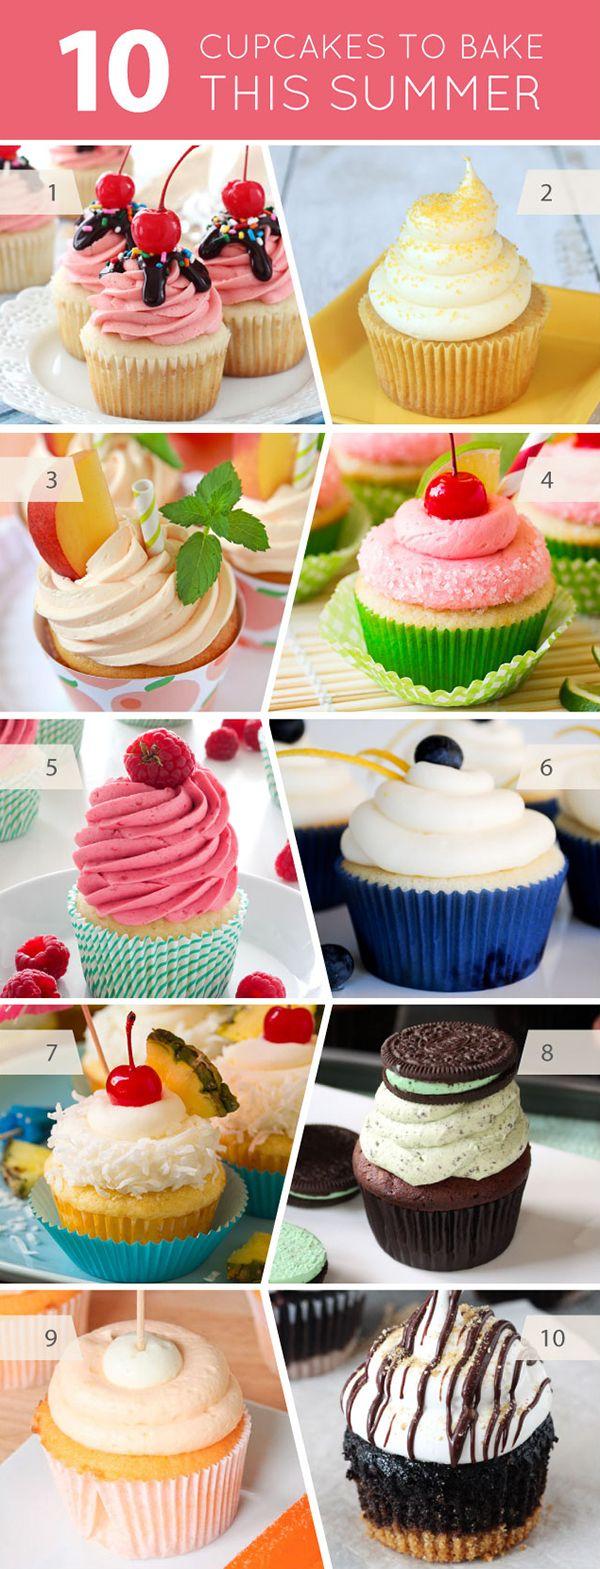 Wedding - 10 Cupcakes To Bake This Summer